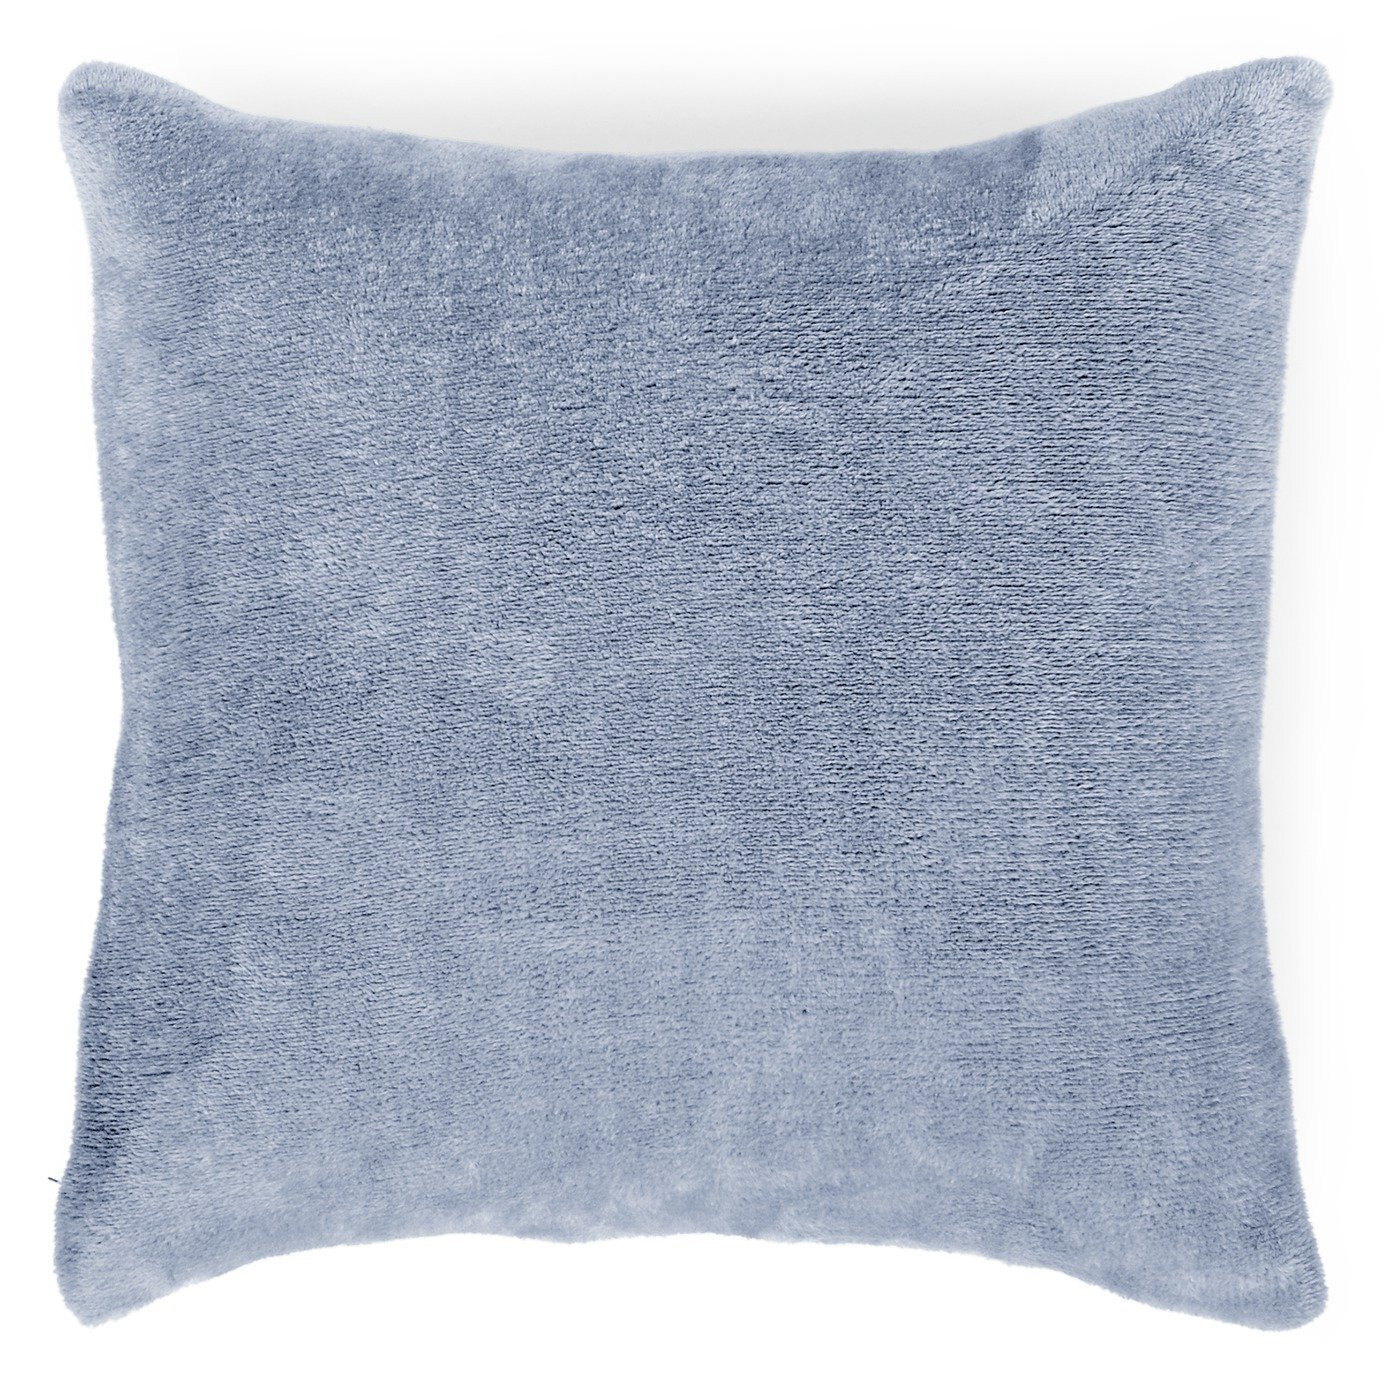 Argos Home Plain Super Soft Fleece Cushion - Blue - 43x43cm - image 1